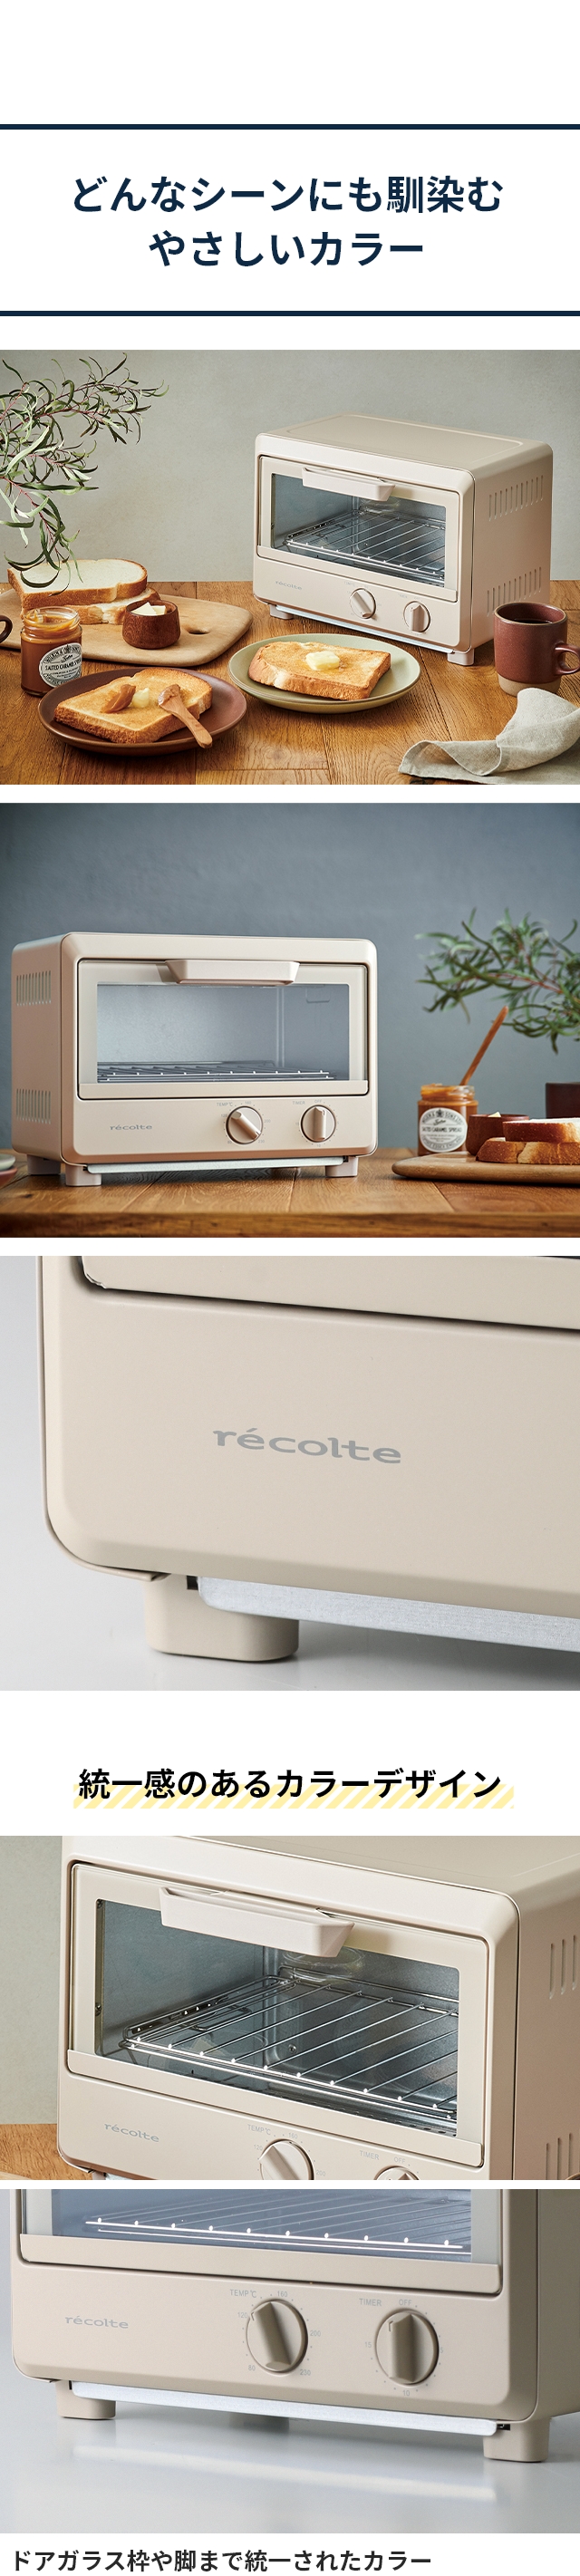 recolte (レコルト) オーブントースター ROT-2